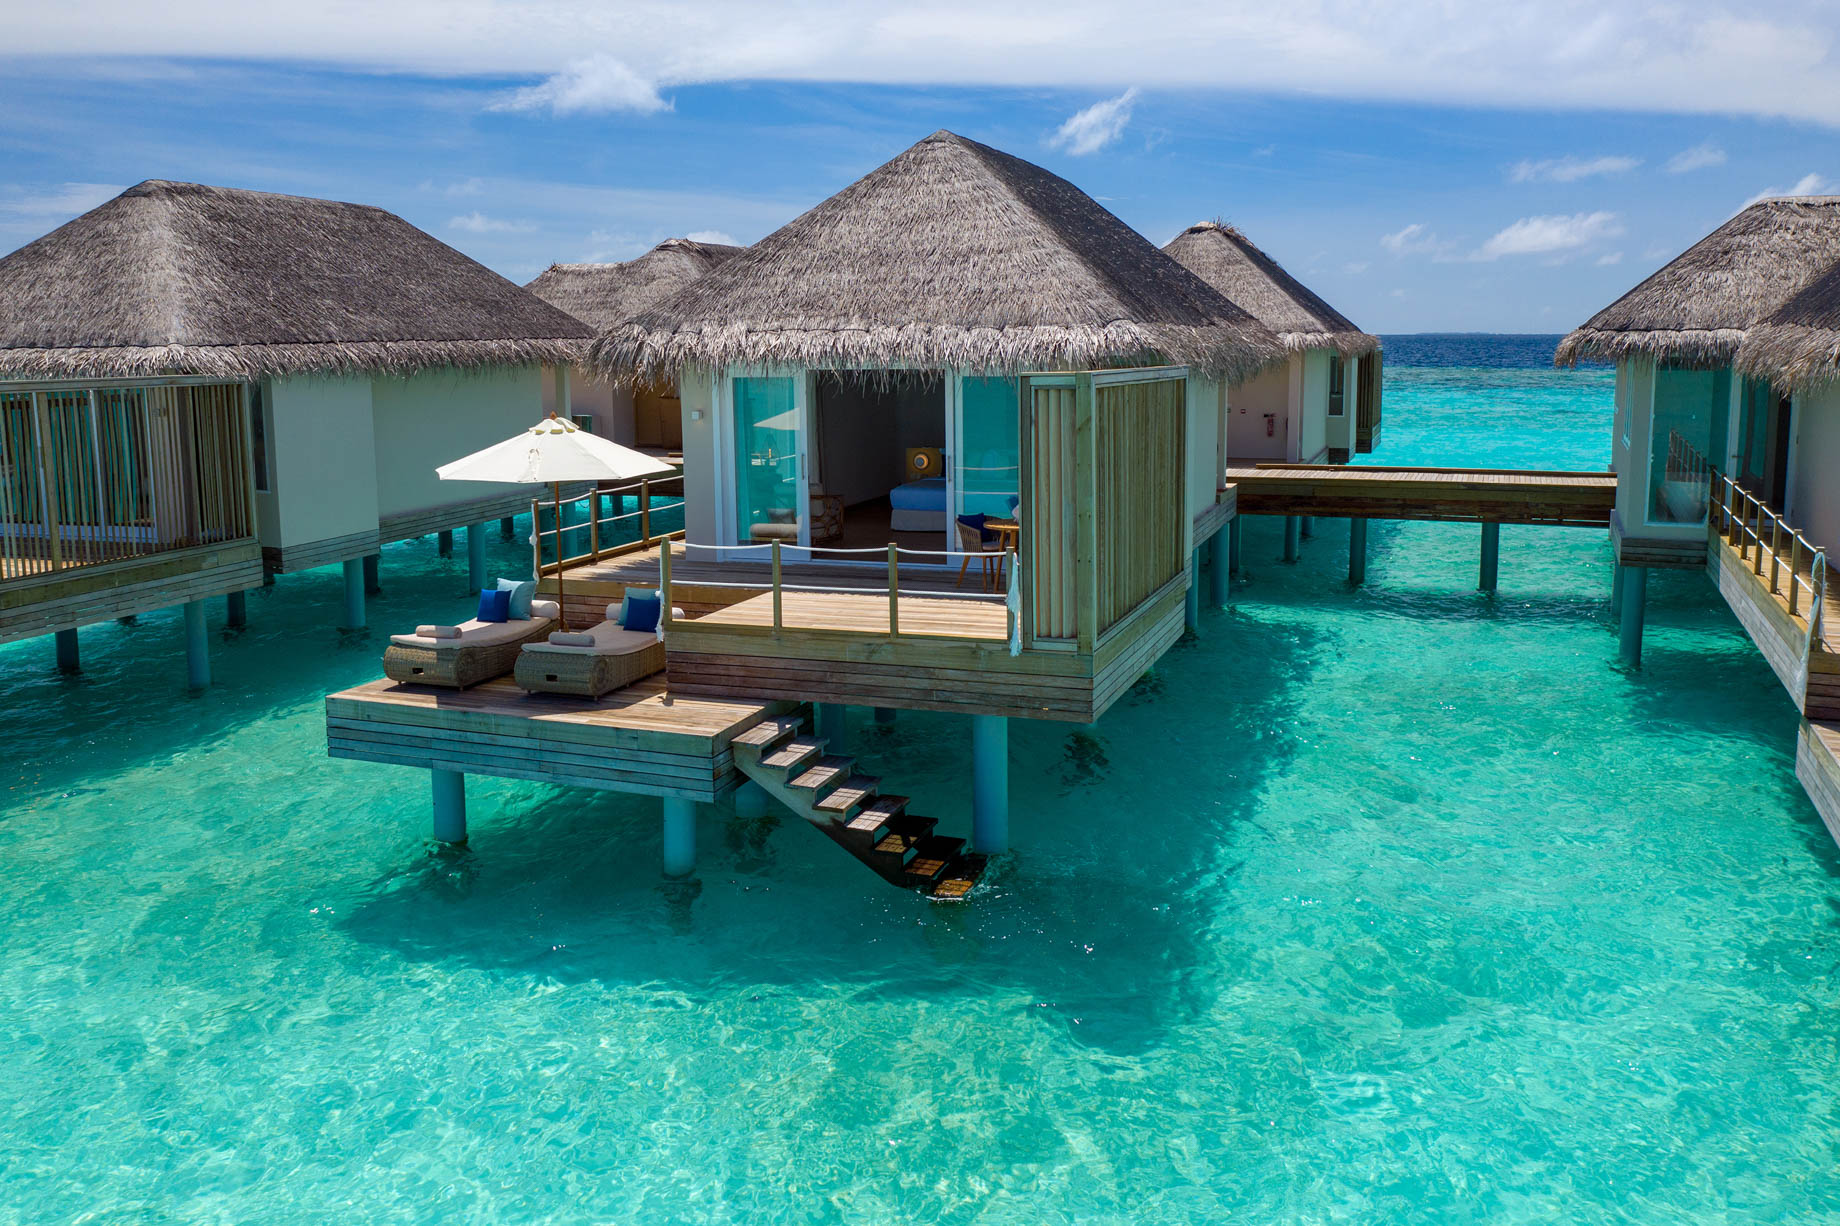 Baglioni Resort Maldives – Maagau Island, Rinbudhoo, Maldives – Water Villa Aerial View